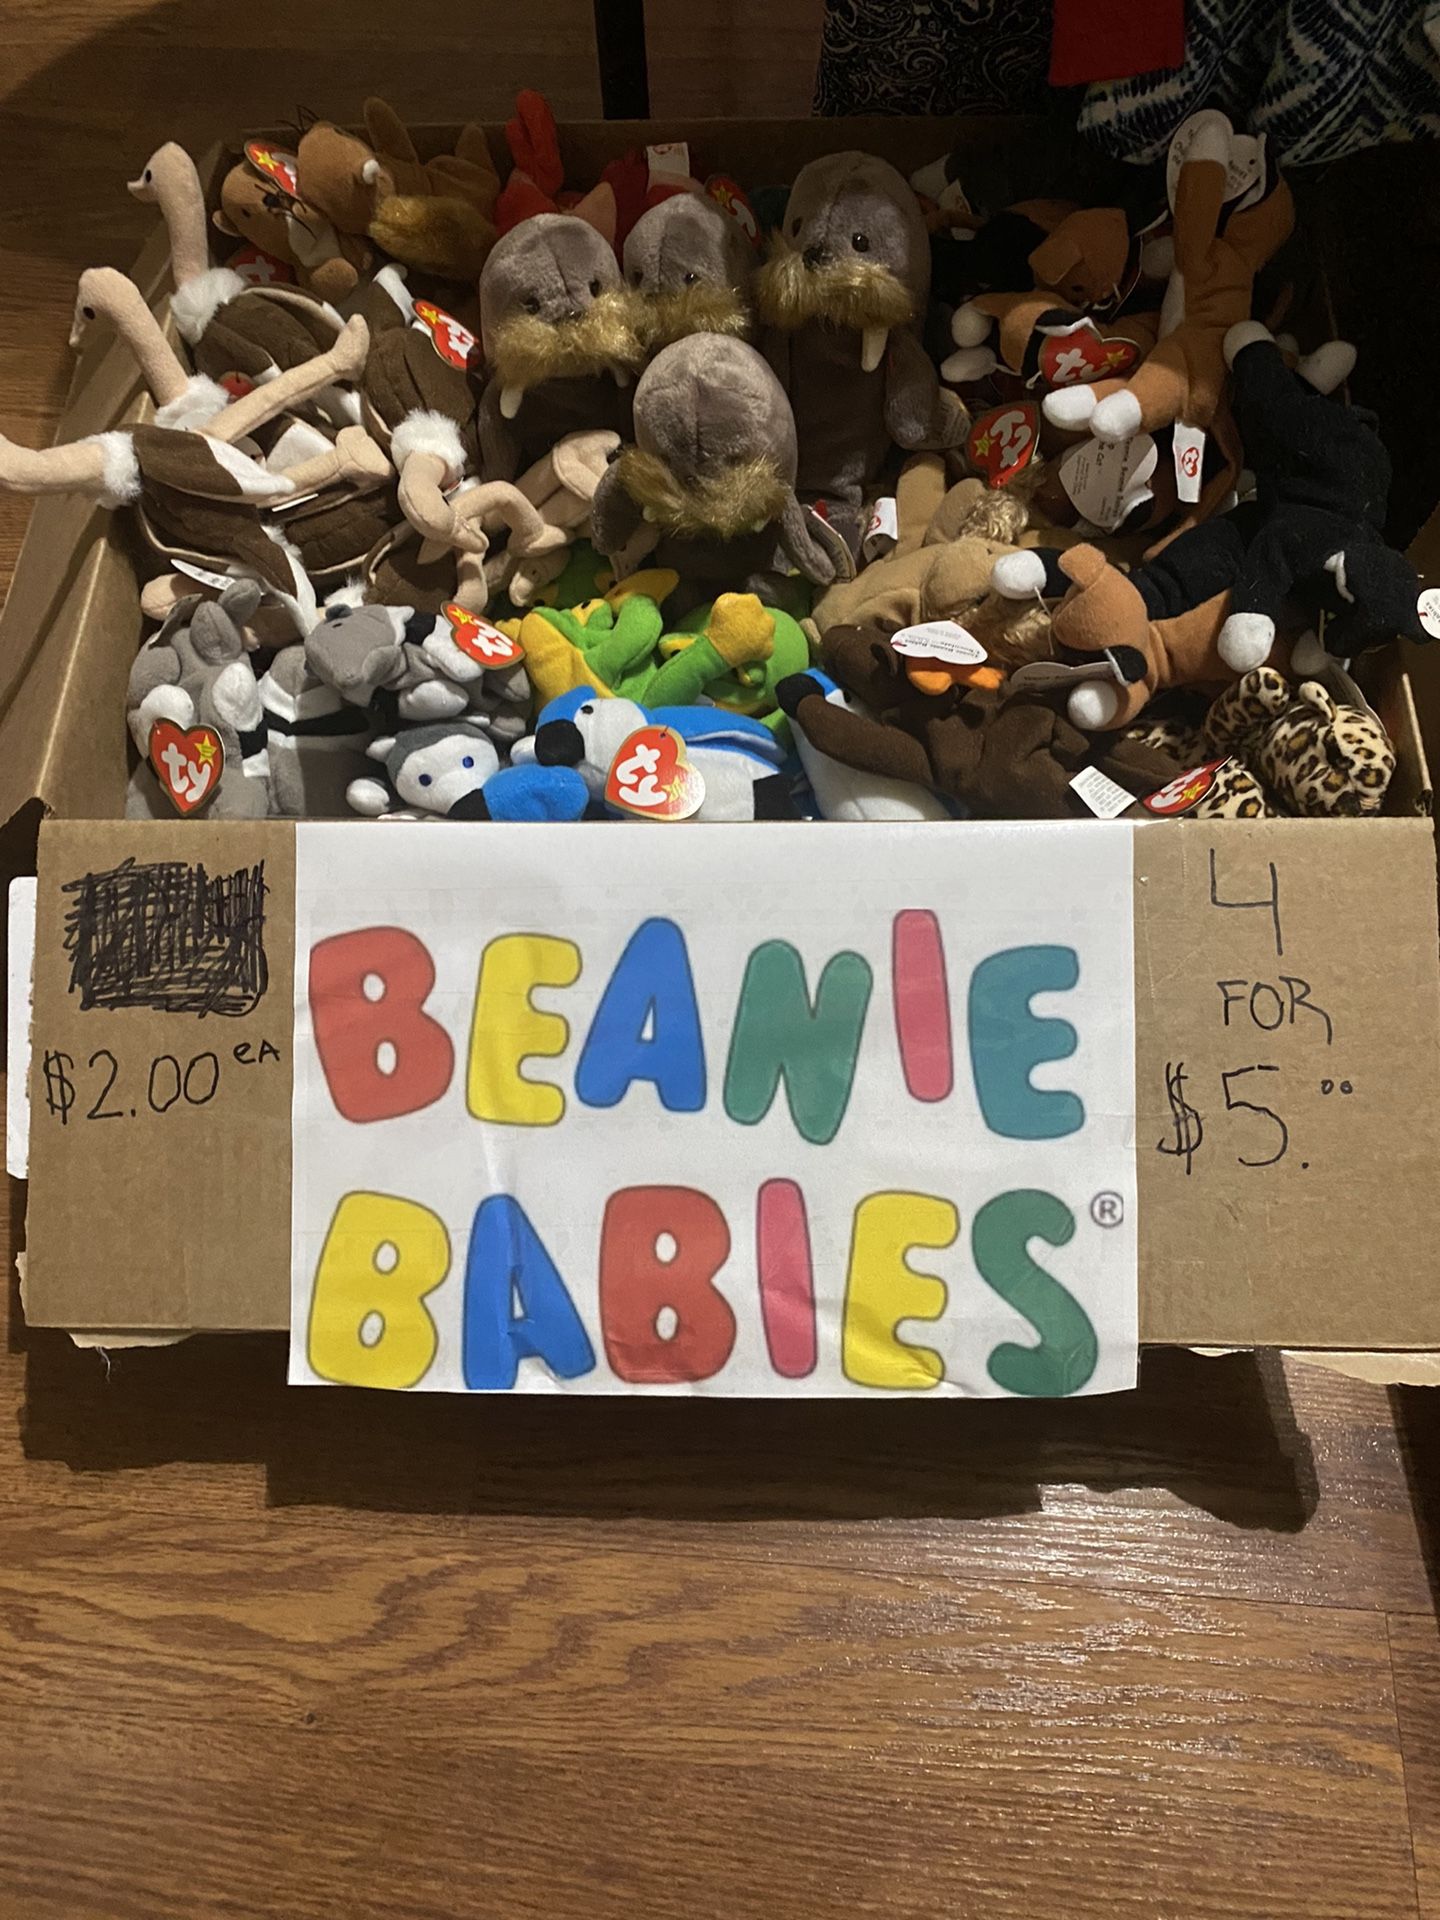 Teenie Beanie Babies and Beanie Babies  Great Price!